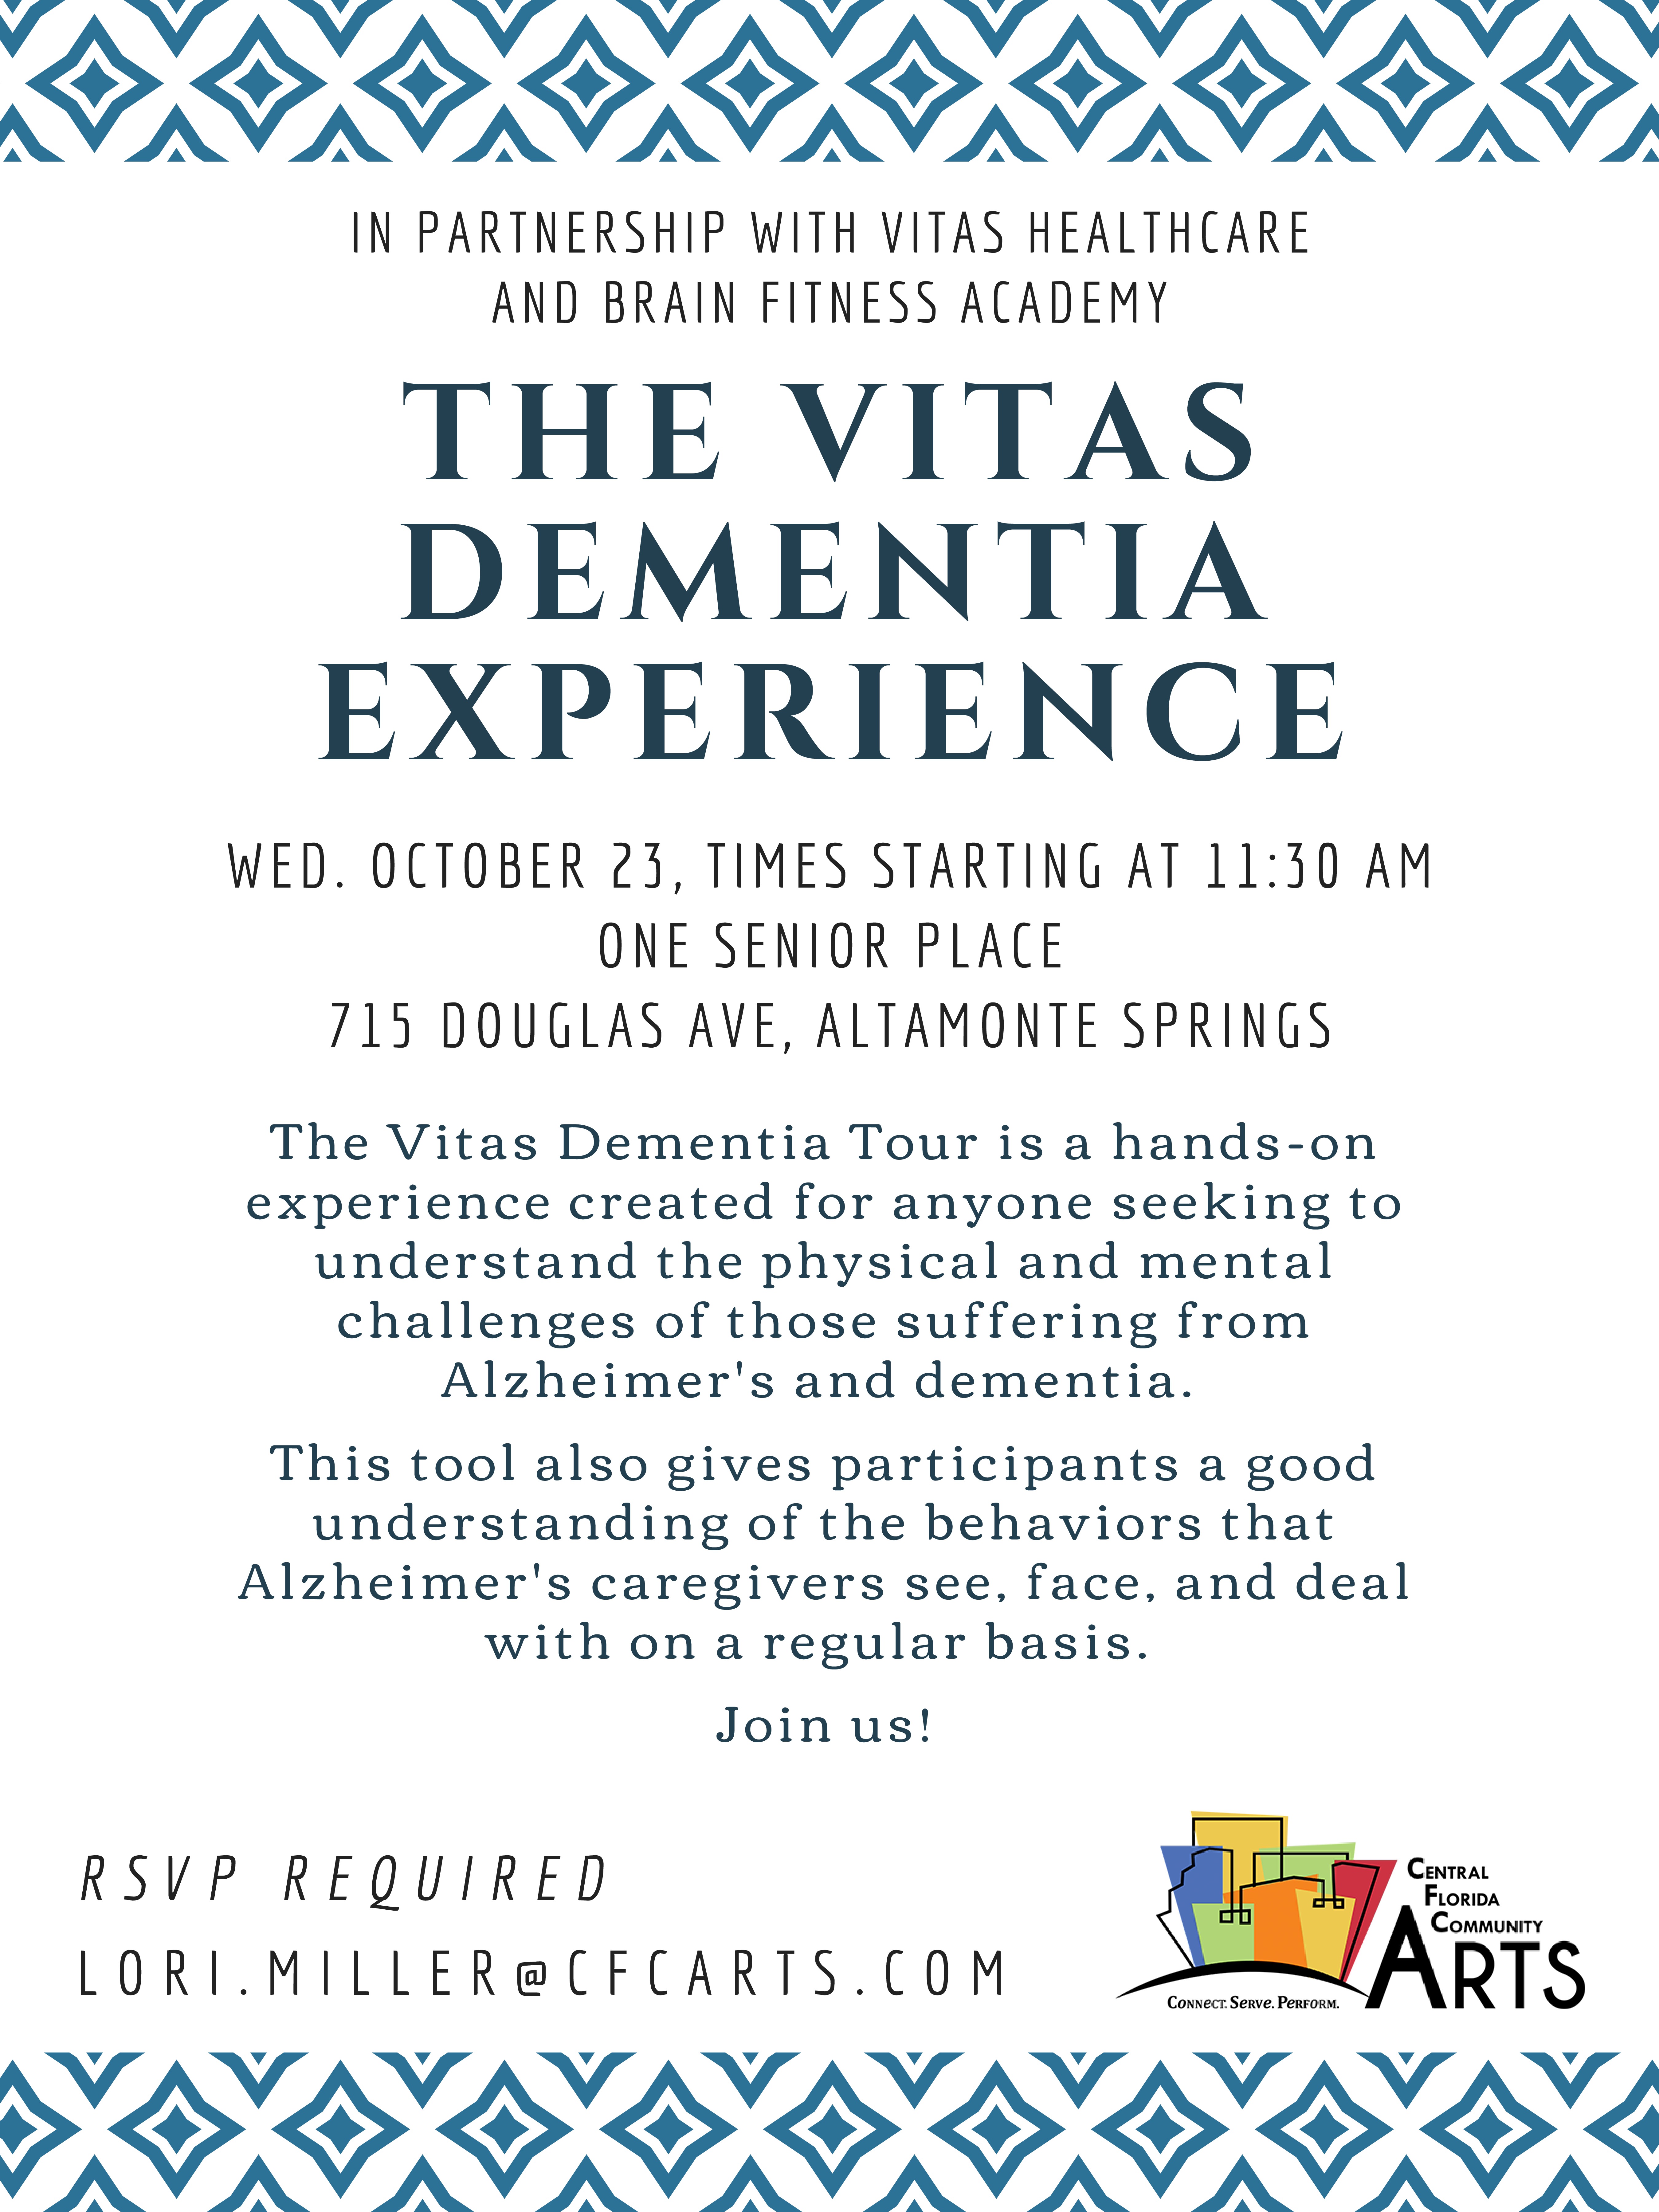 The VITAS Dementia Experience